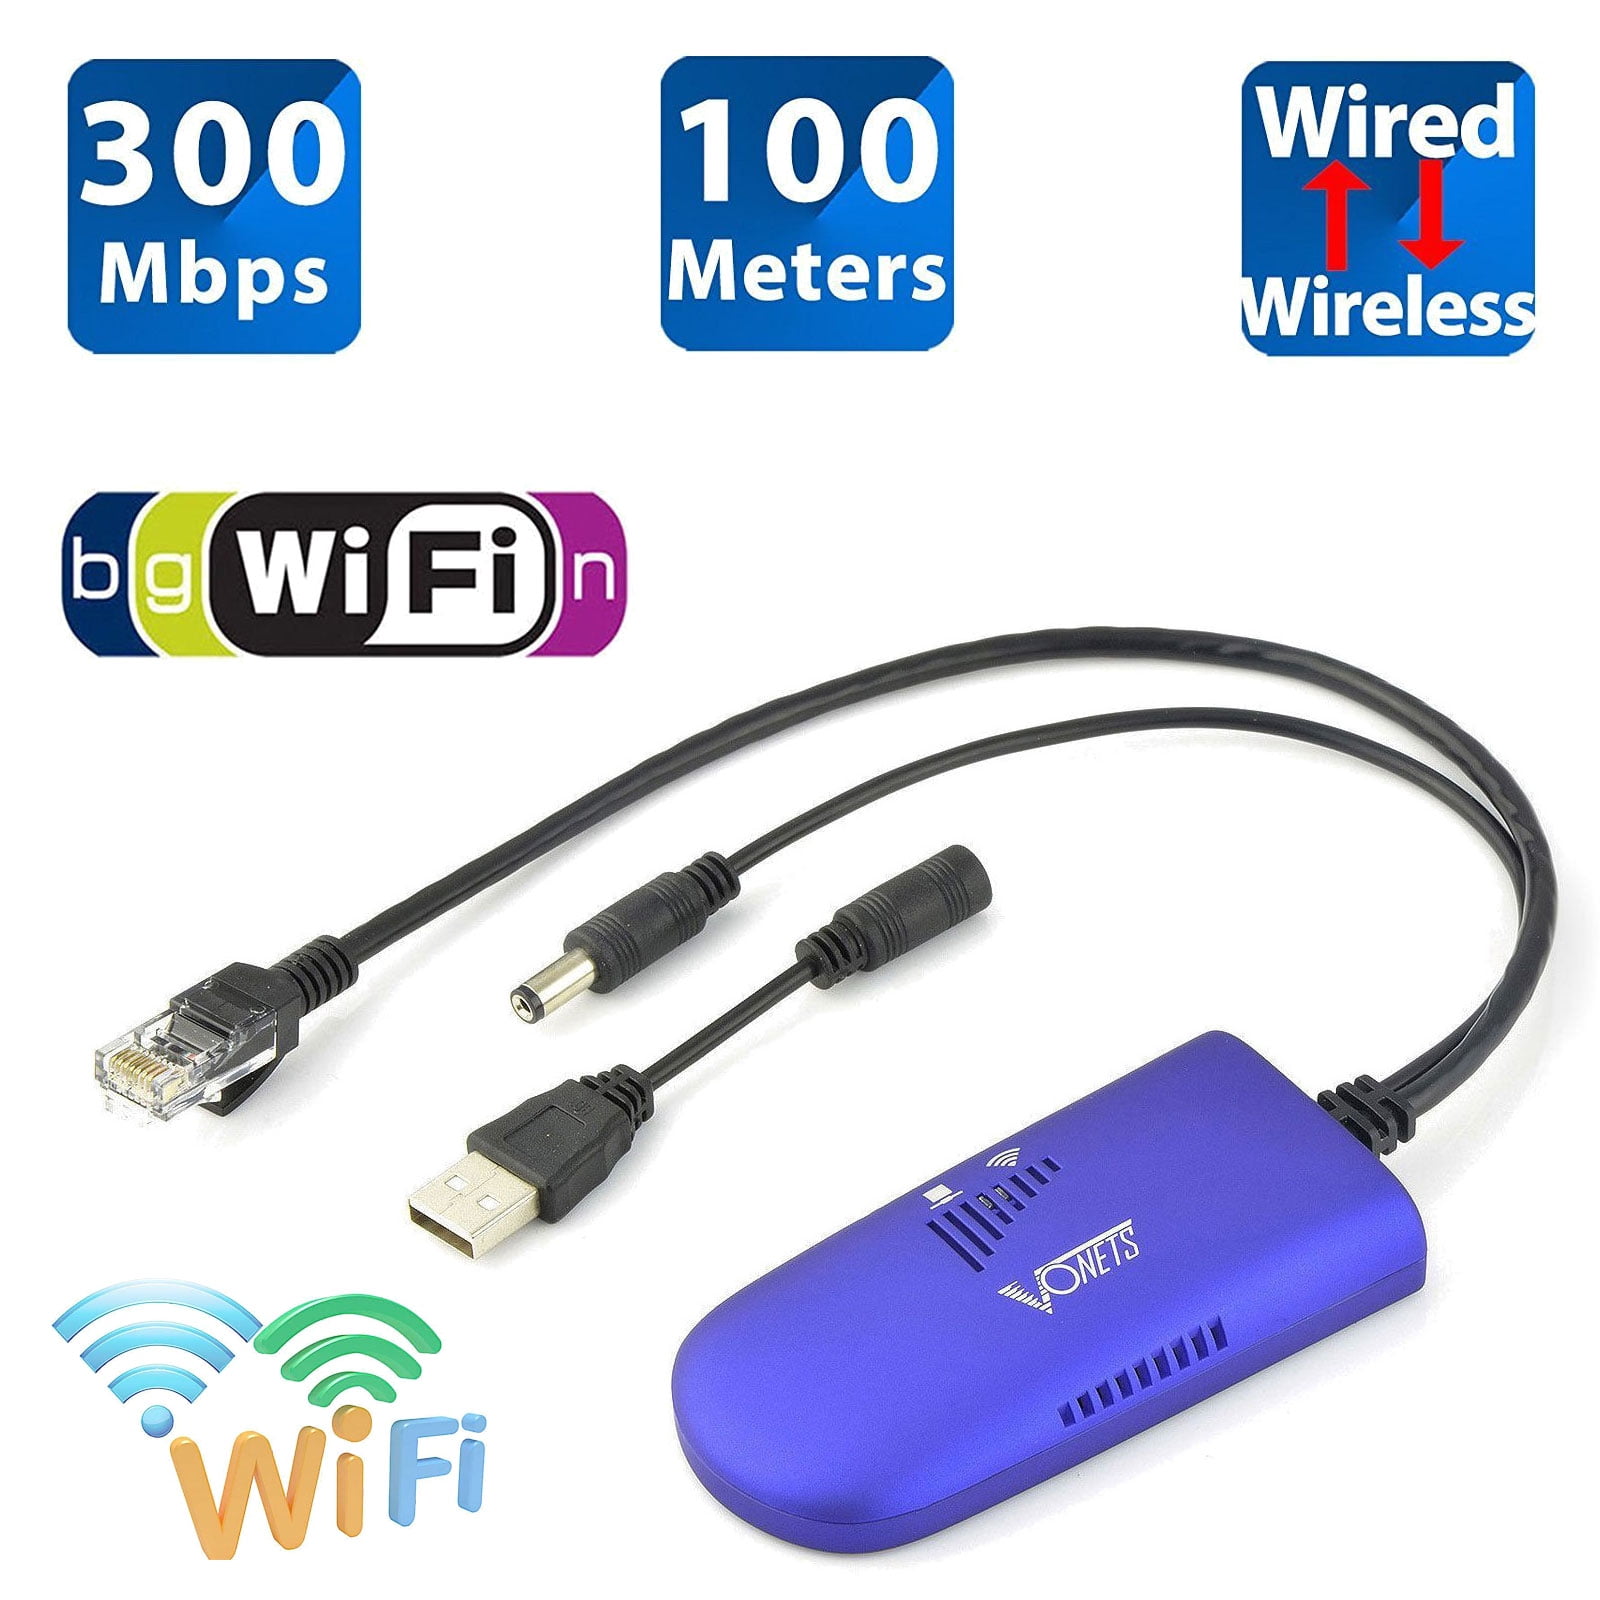 VONETS Mini Wireless WiFi Network Bridge Router Repeater USB WAN/LAN 300Mbps 